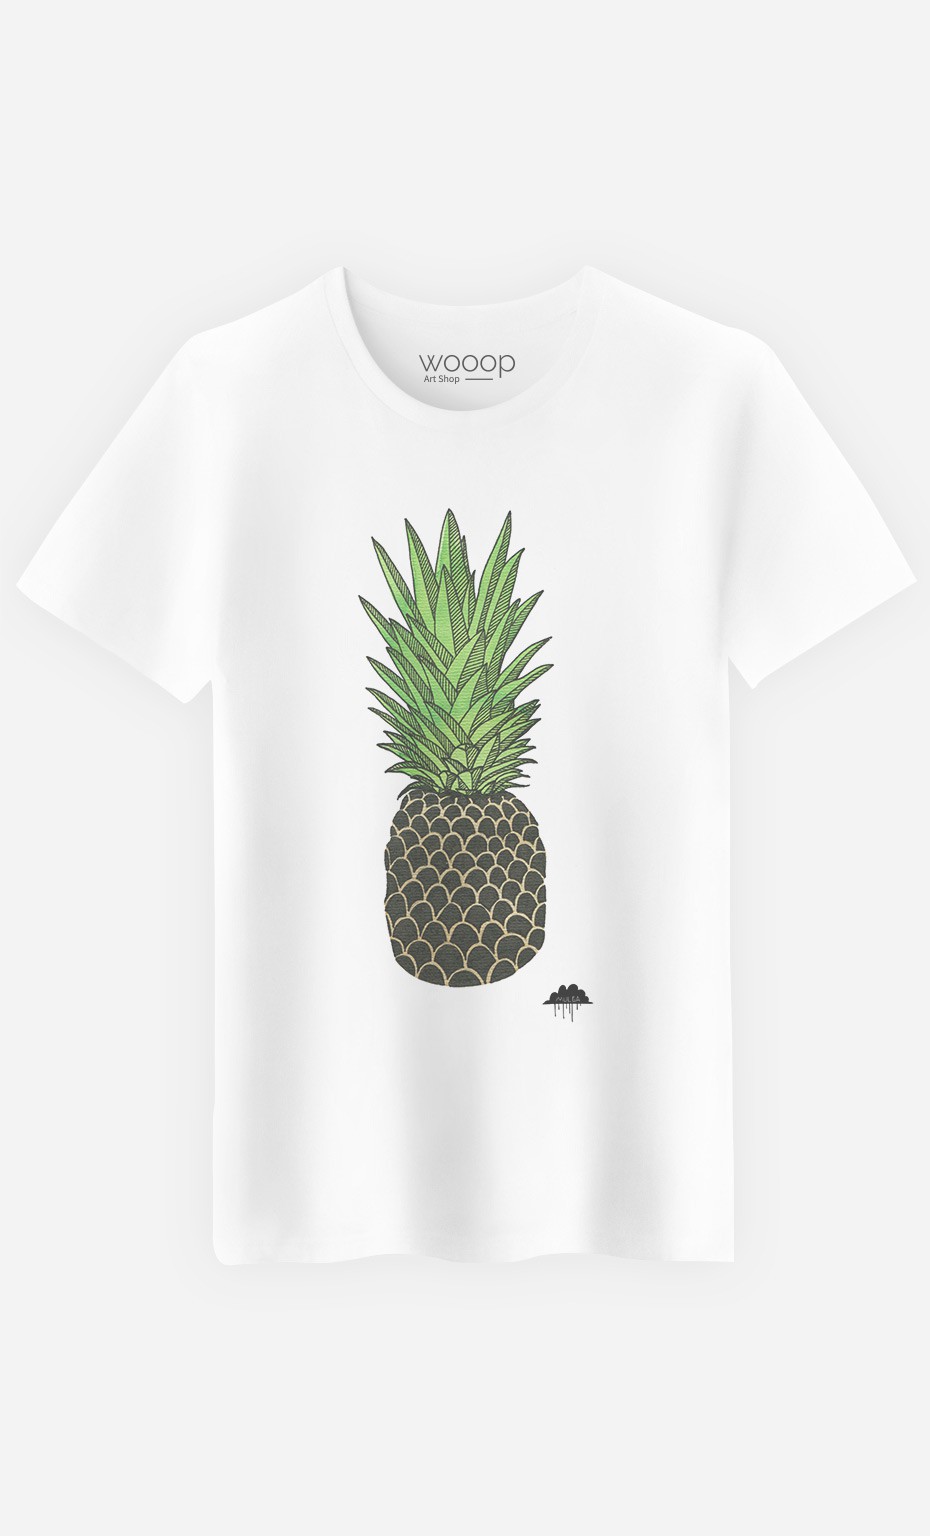 T-Shirt Pineapple